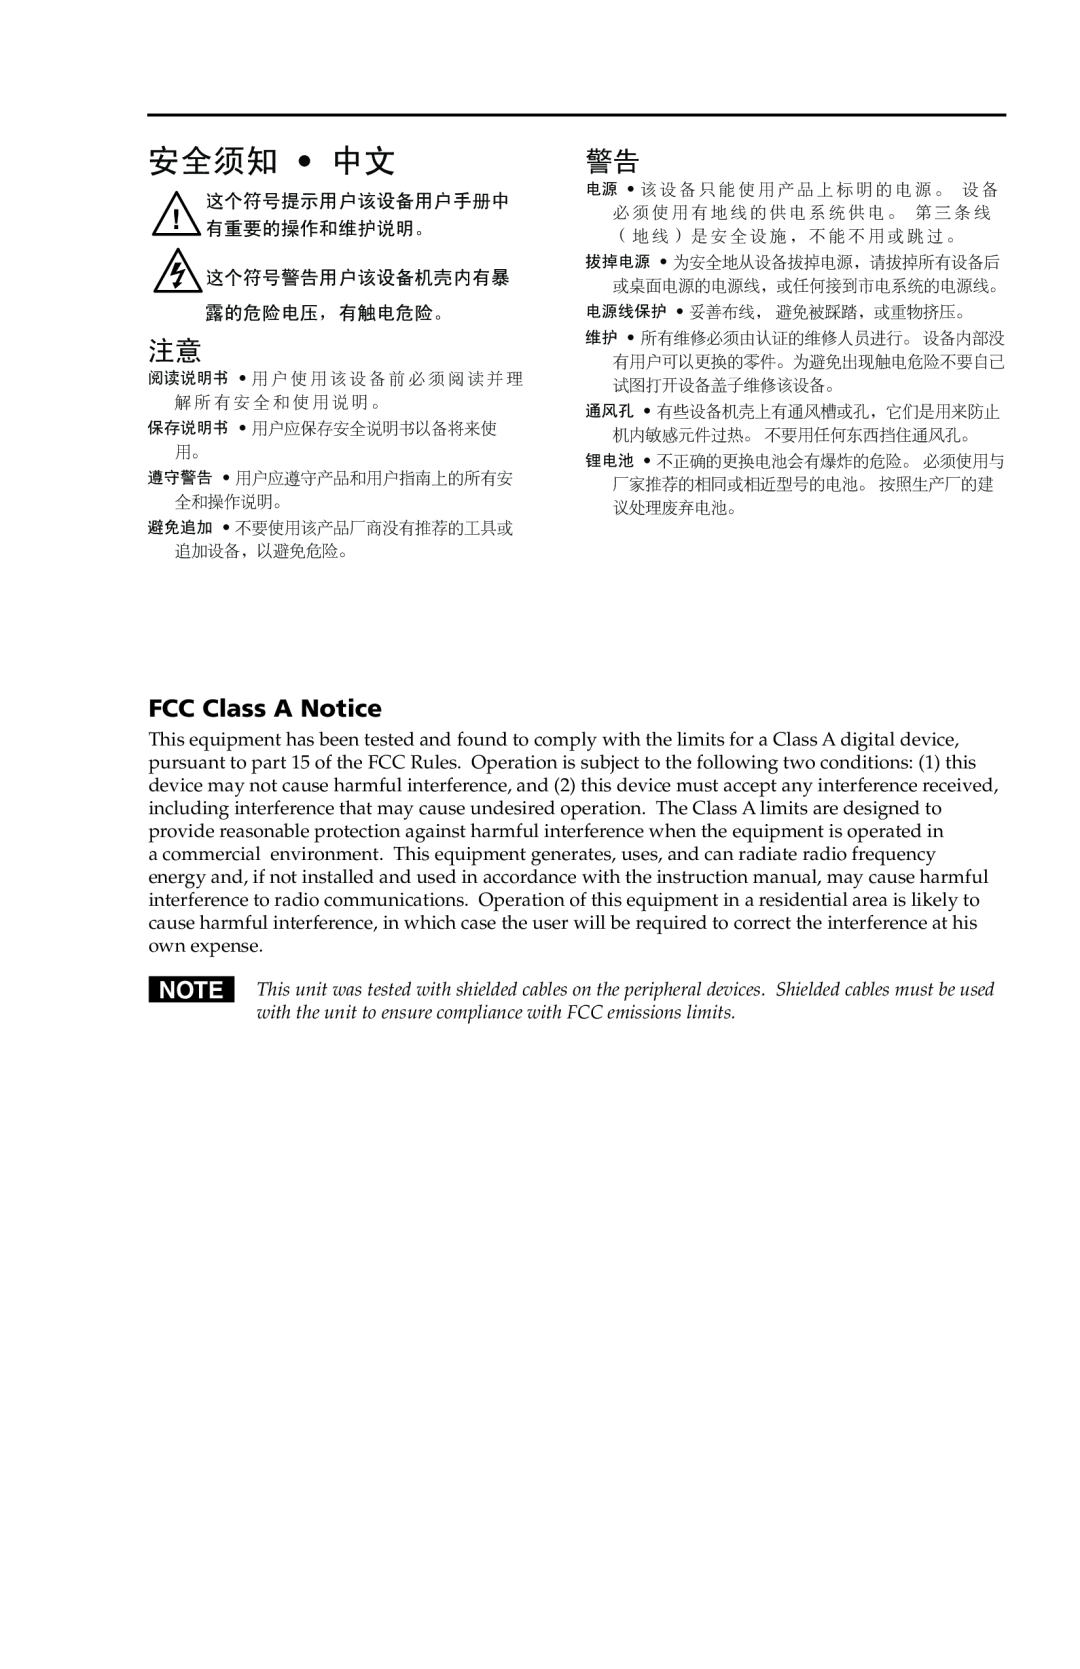 Extron electronic ADA 2/GLI 350xi user manual FCC Class A Notice, 安全须知 中文 